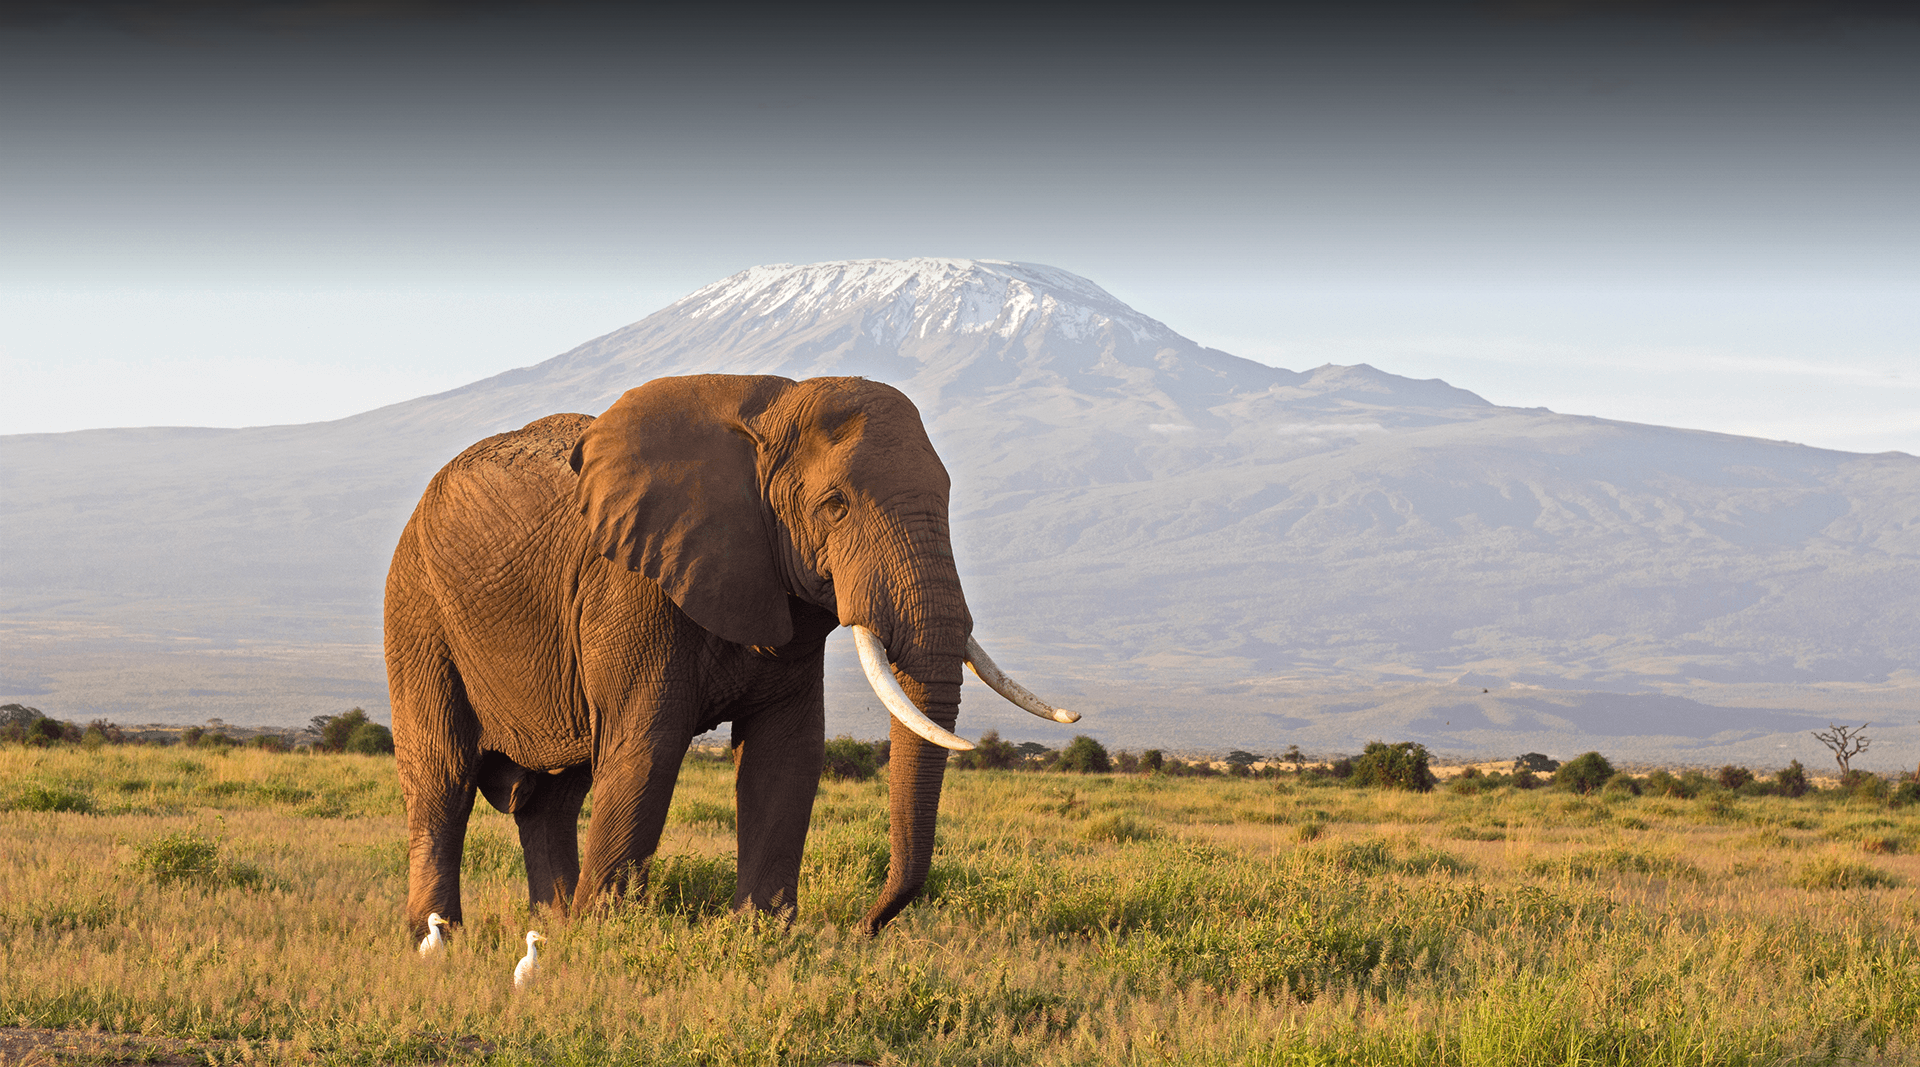 Elephant in the Kenyan Savanna.